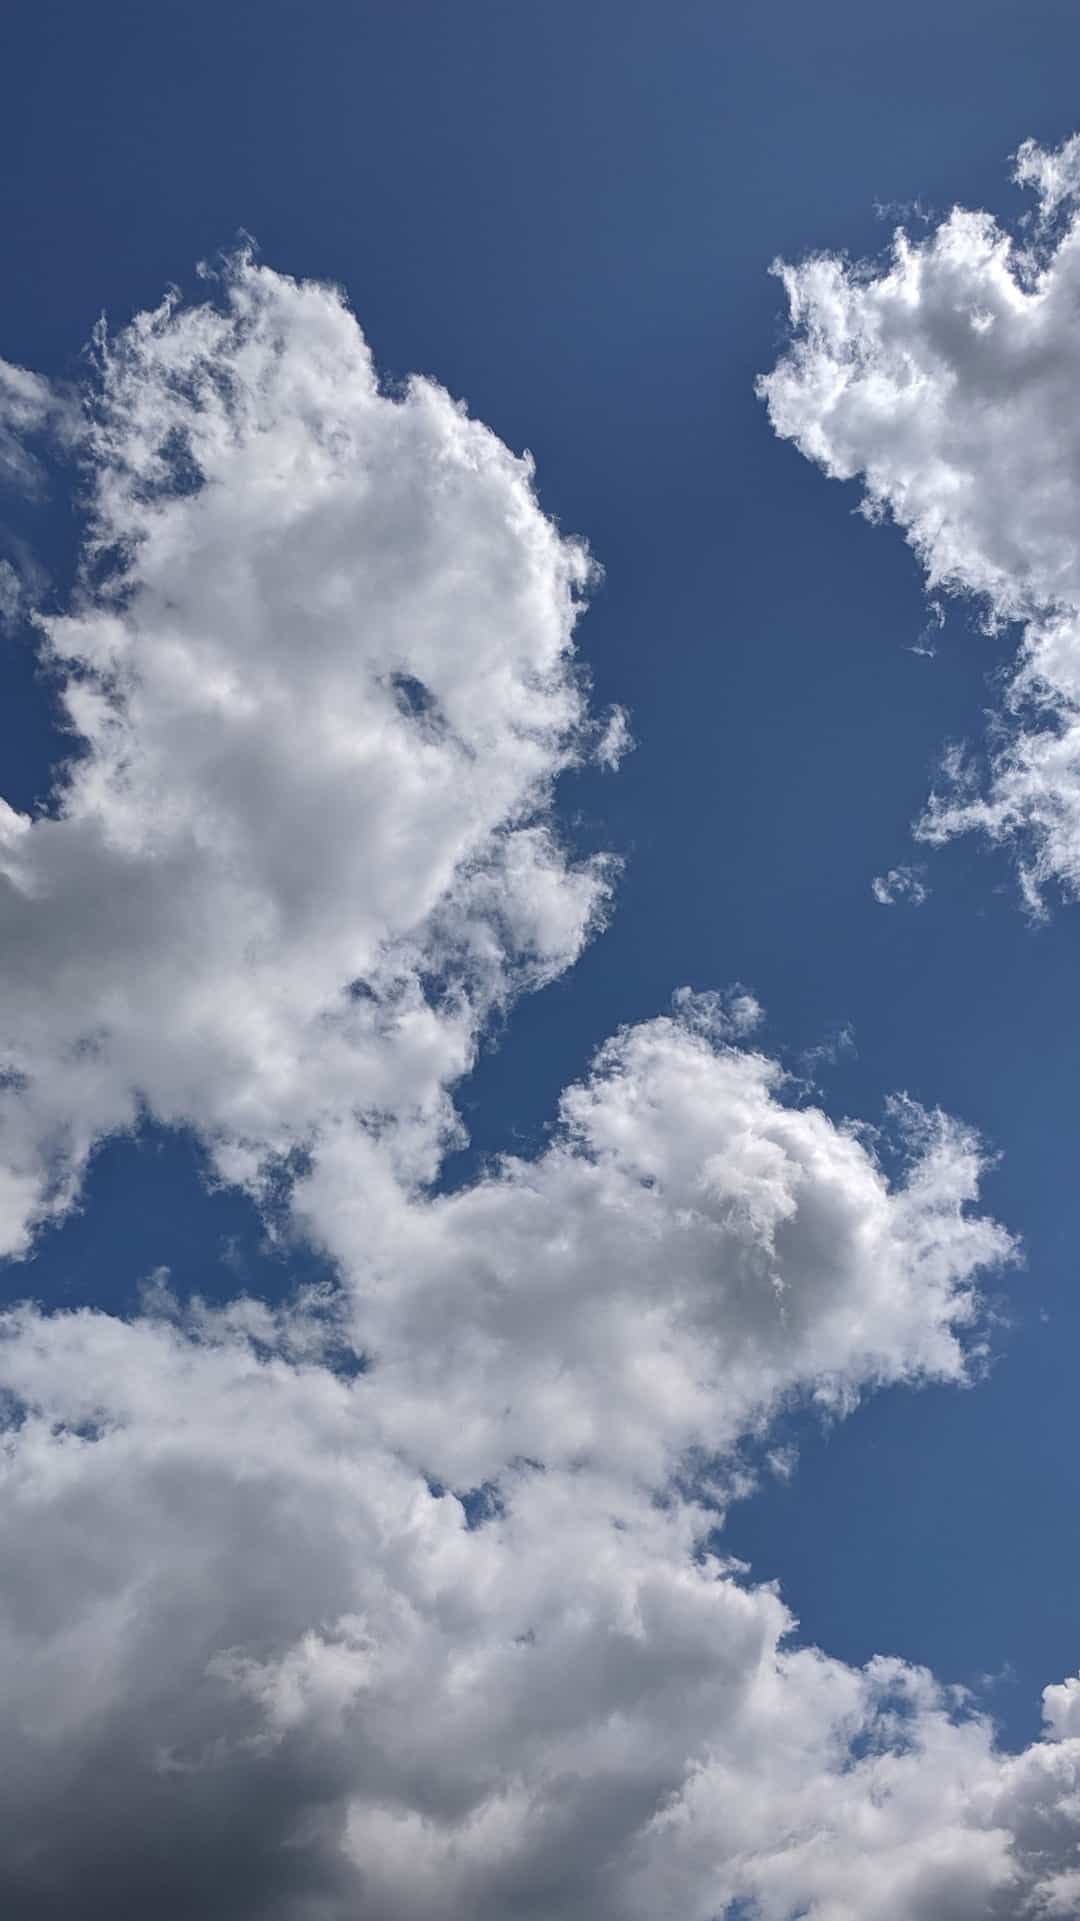 Clouds wallpaper iphone .com